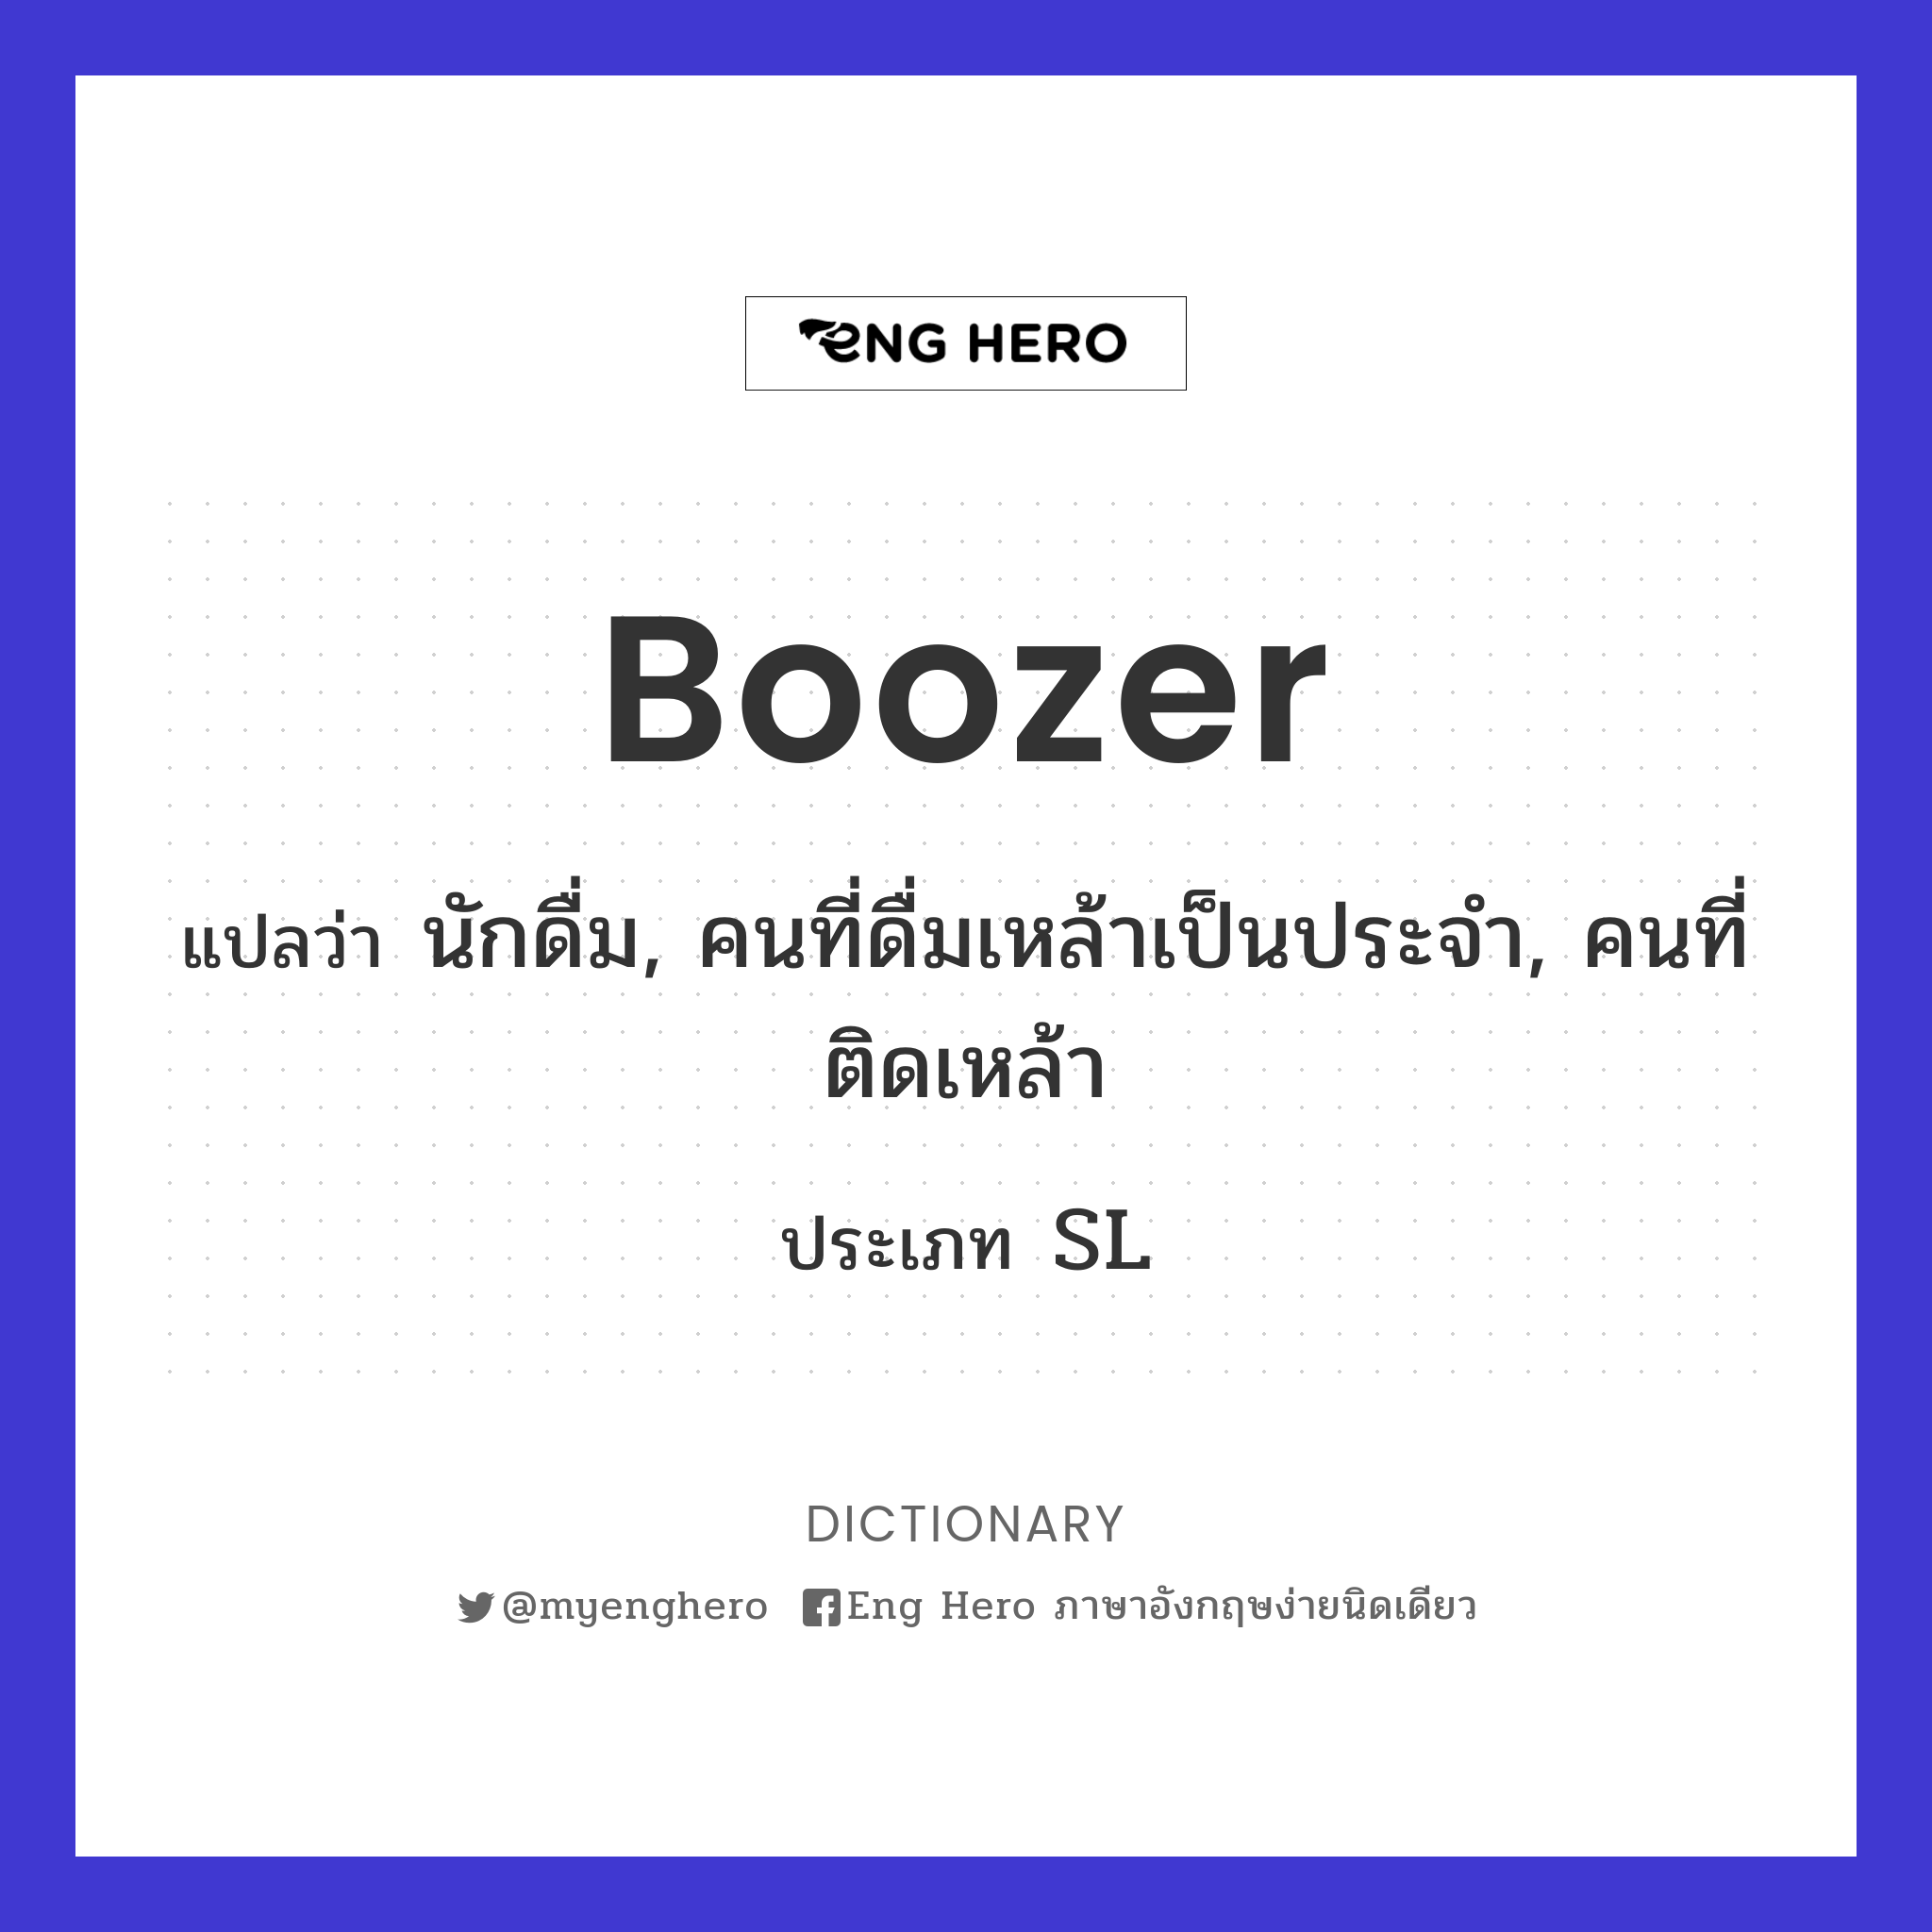 boozer